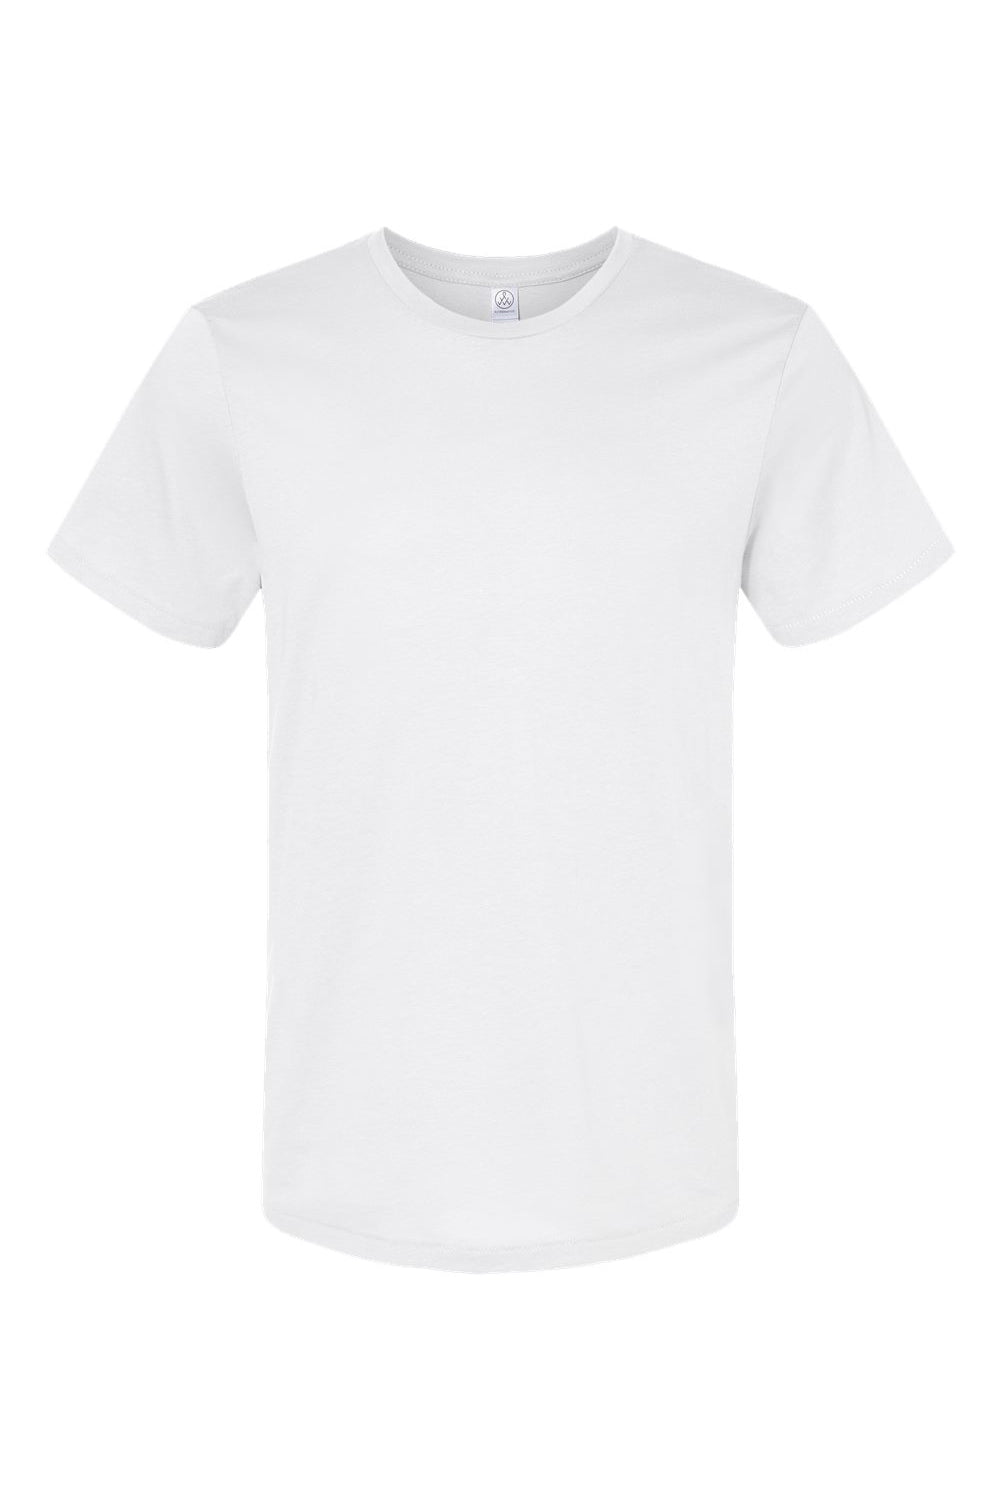 Alternative 6005 Mens Organic Short Sleeve Crewneck T-Shirt Earth White Flat Front